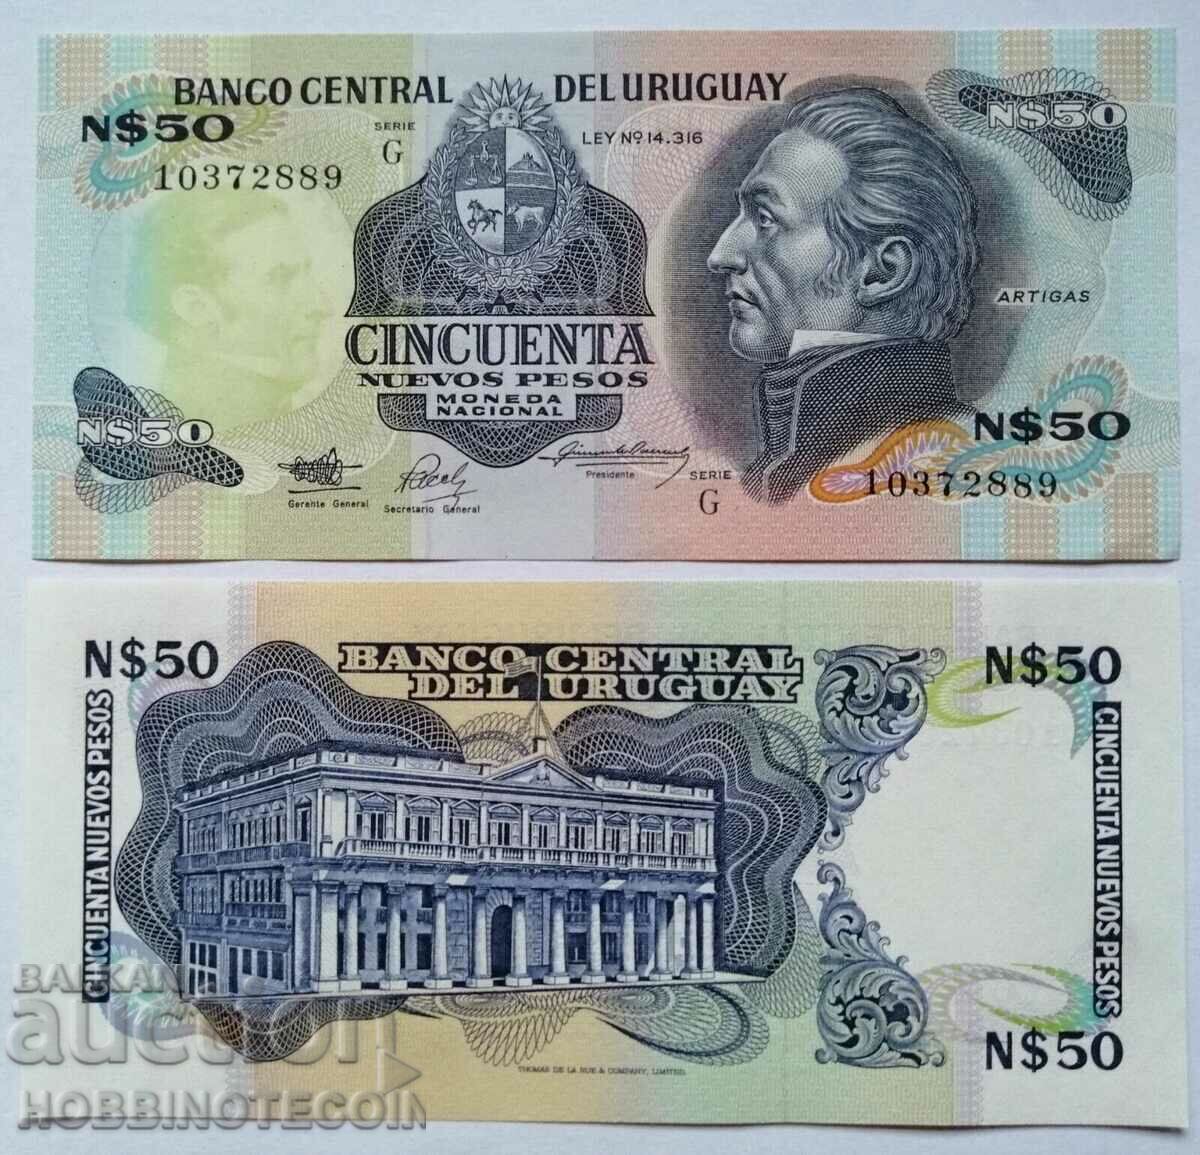 URUGUAY URUGUAY 50 Peso issue - issue 1988 NEW UNC